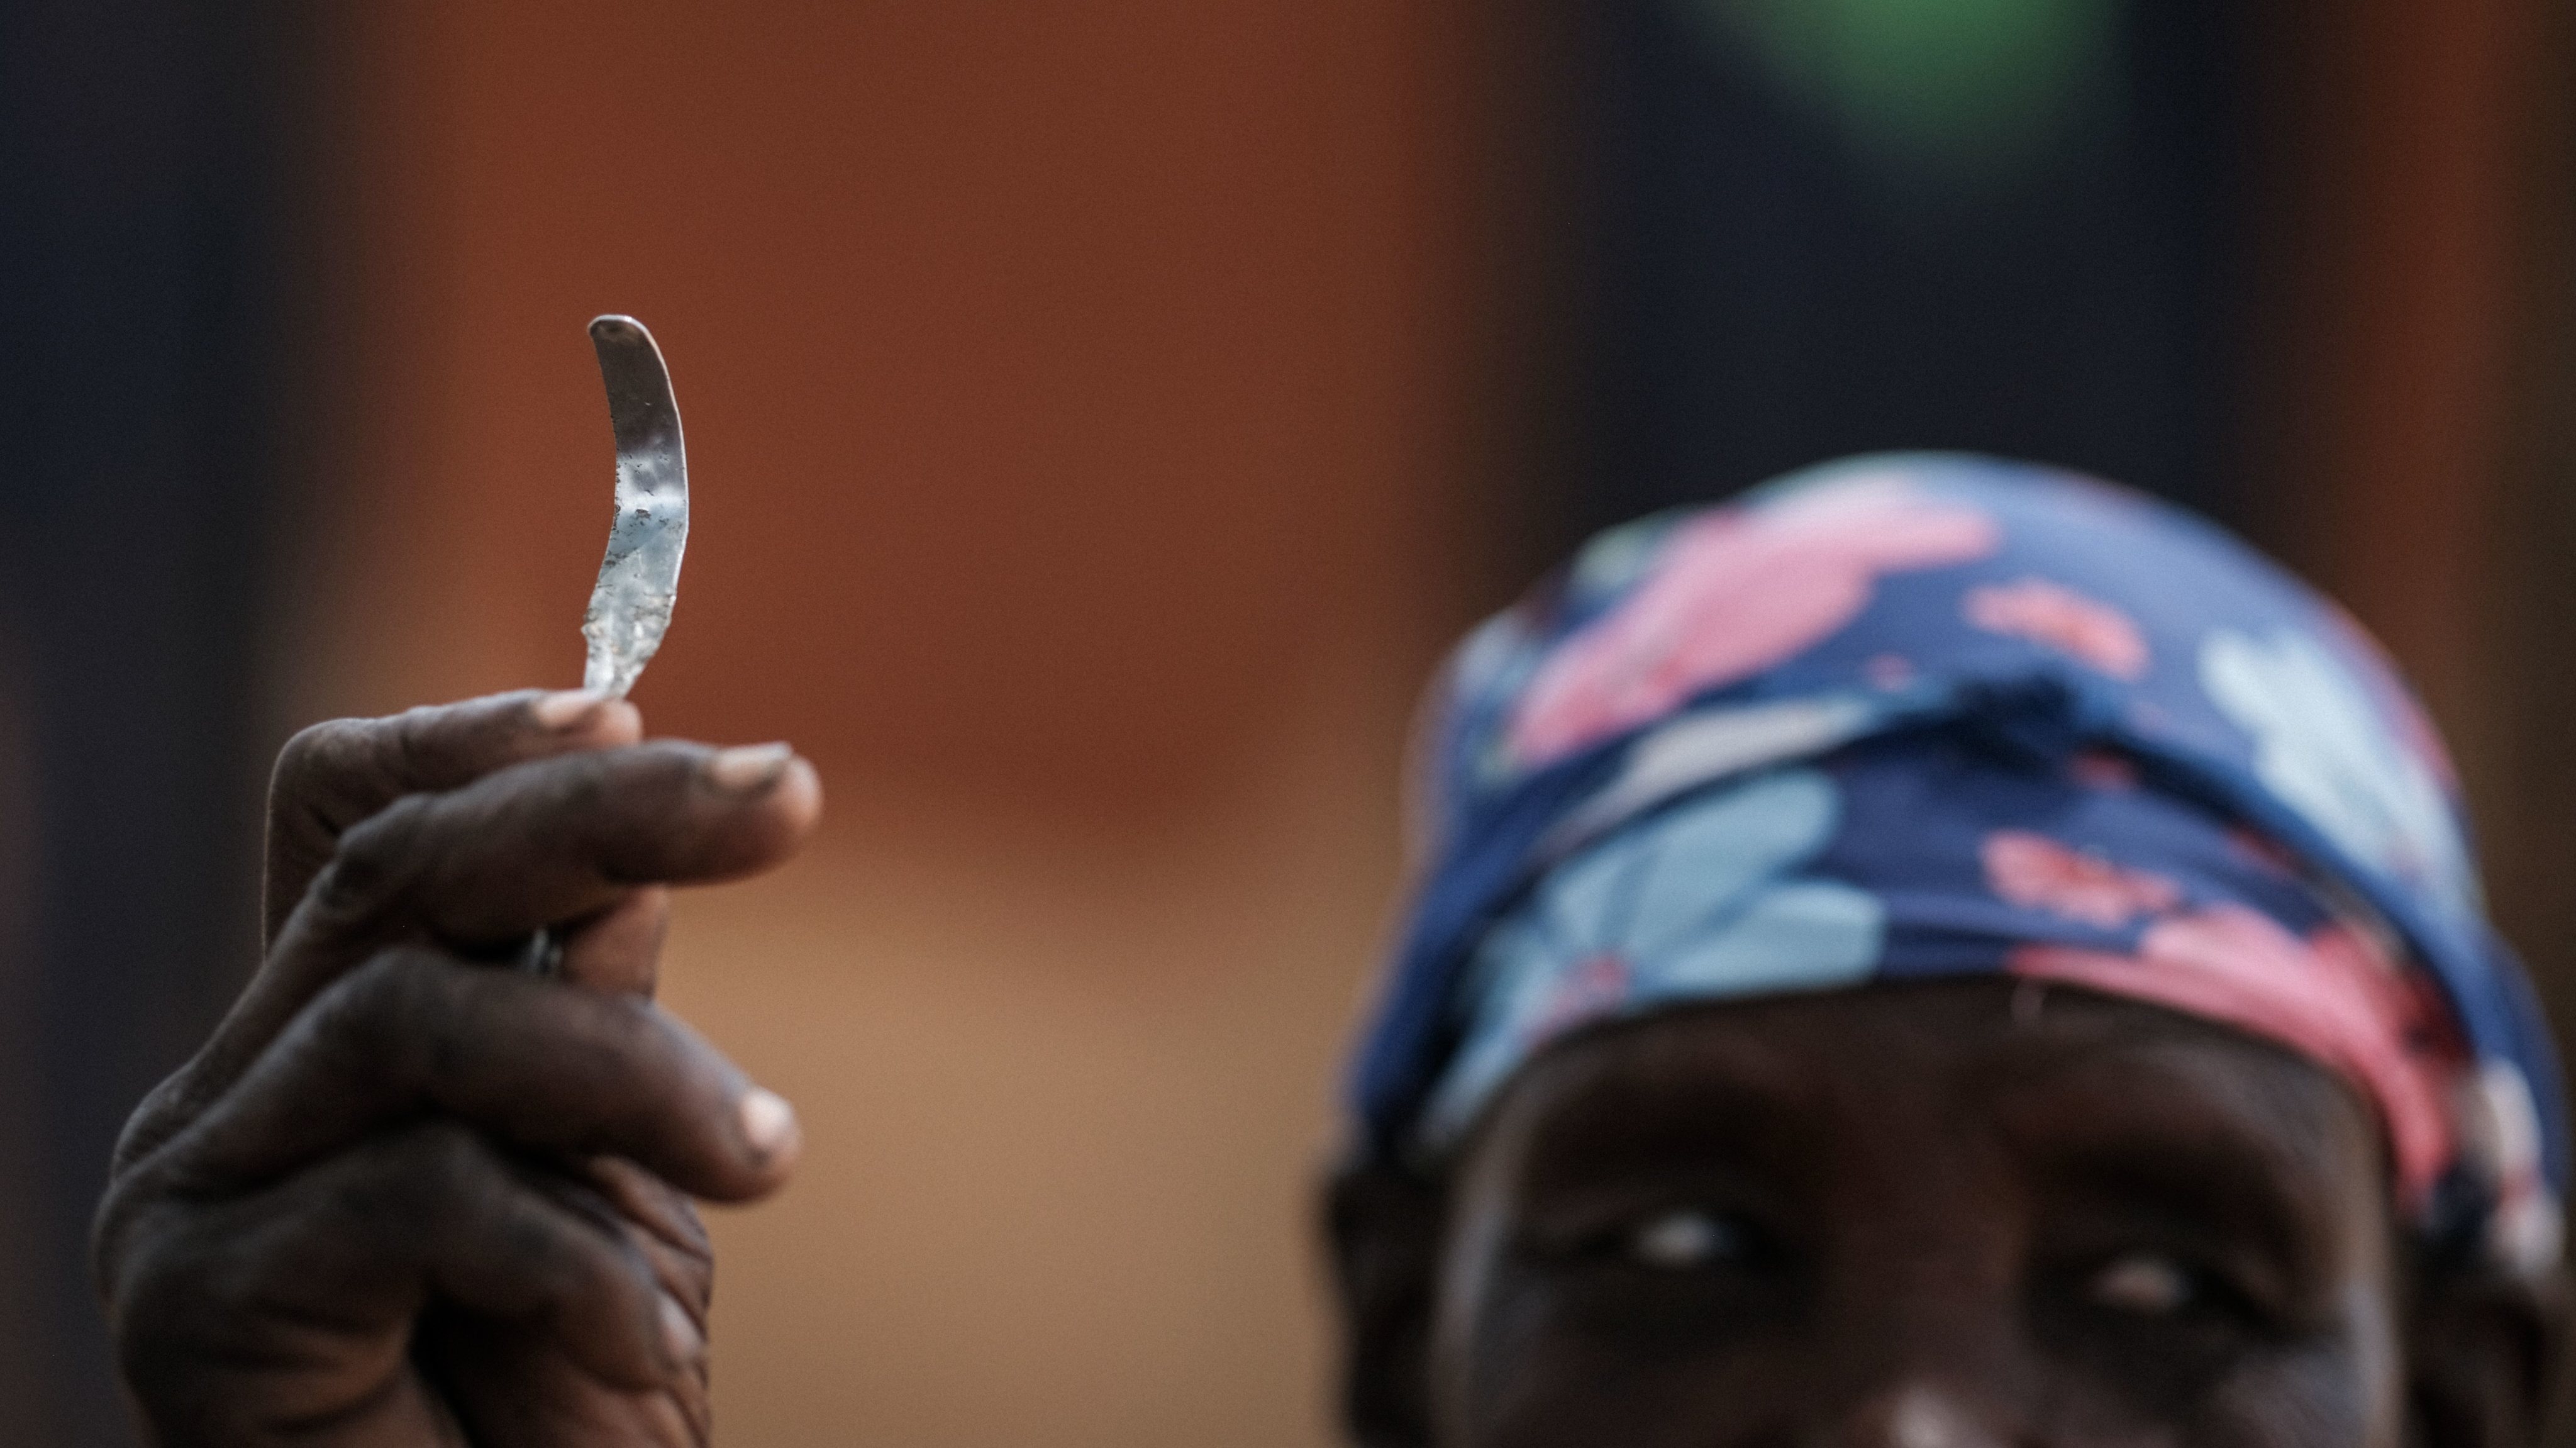 UGANDA-HEALTH-TRADITION-FGM-RIGHTS